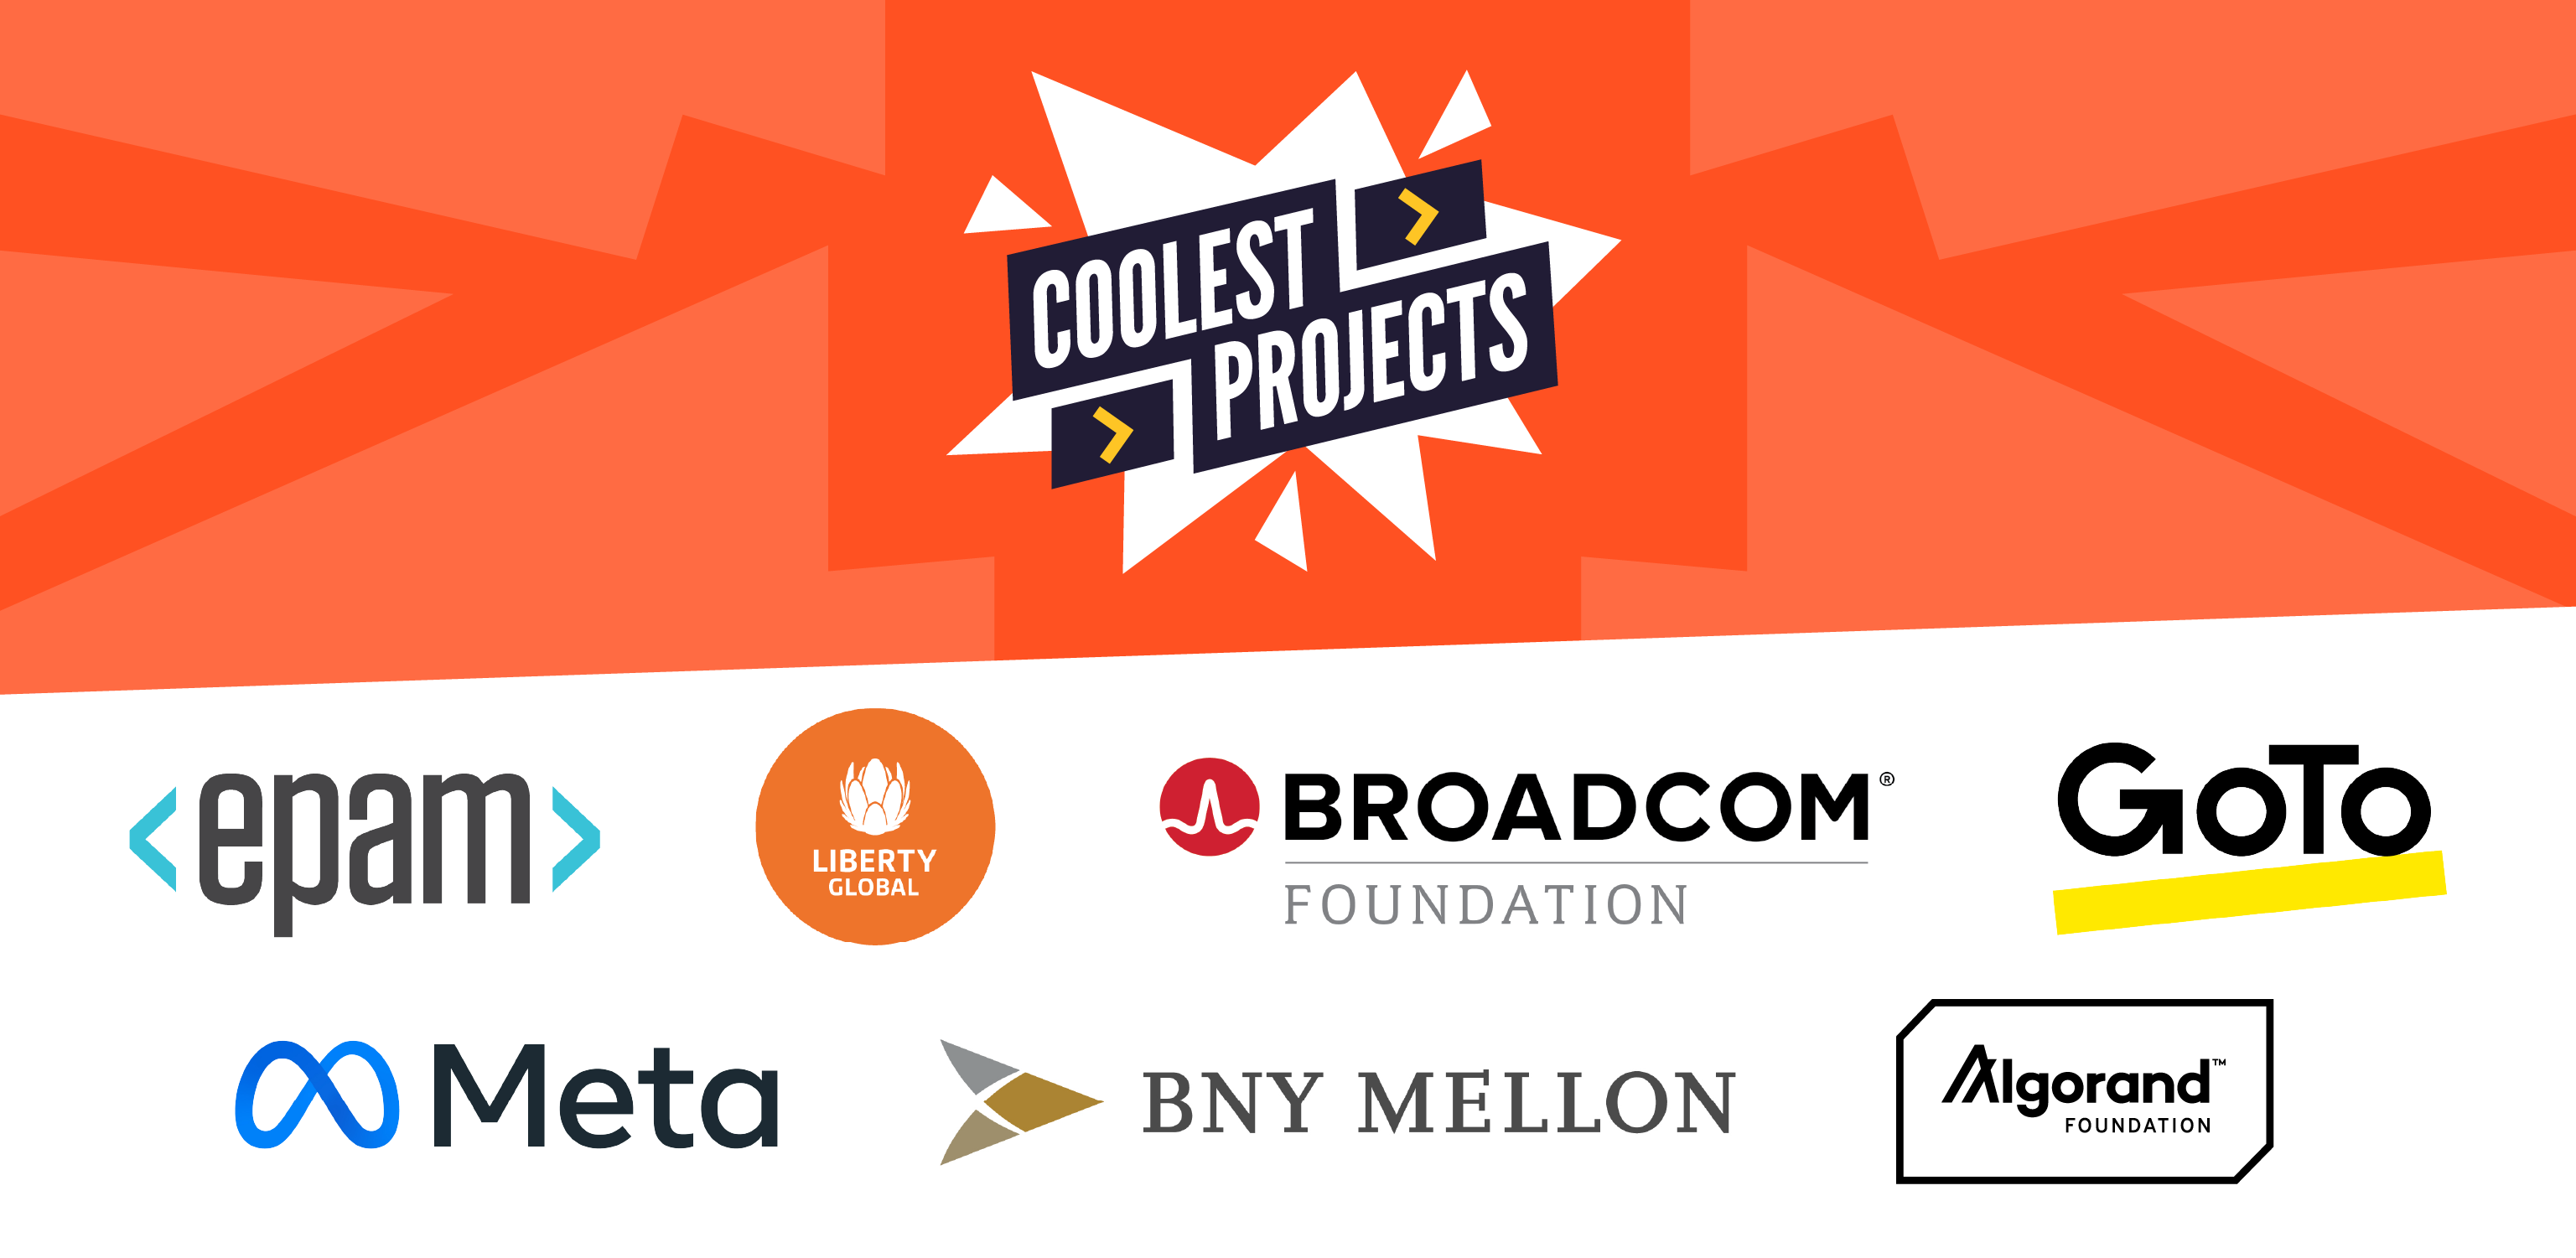 Coolest Projects sponsors: EPAM, Liberty Global, Broadcom Foundation, GoTo, Meta, BNY Mellon, and Algorand Foundation. 